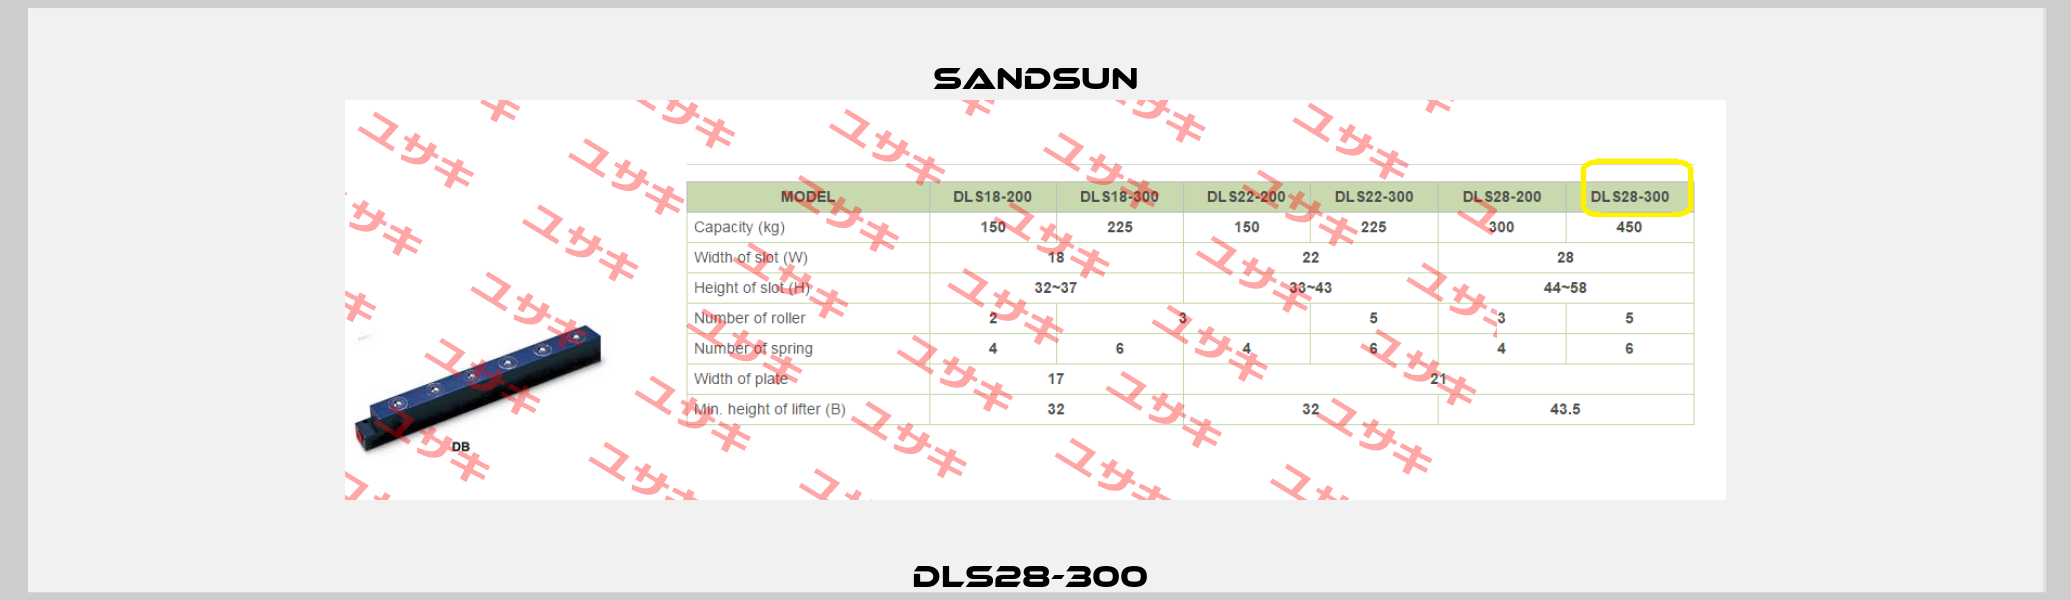 DLS28-300  Sandsun